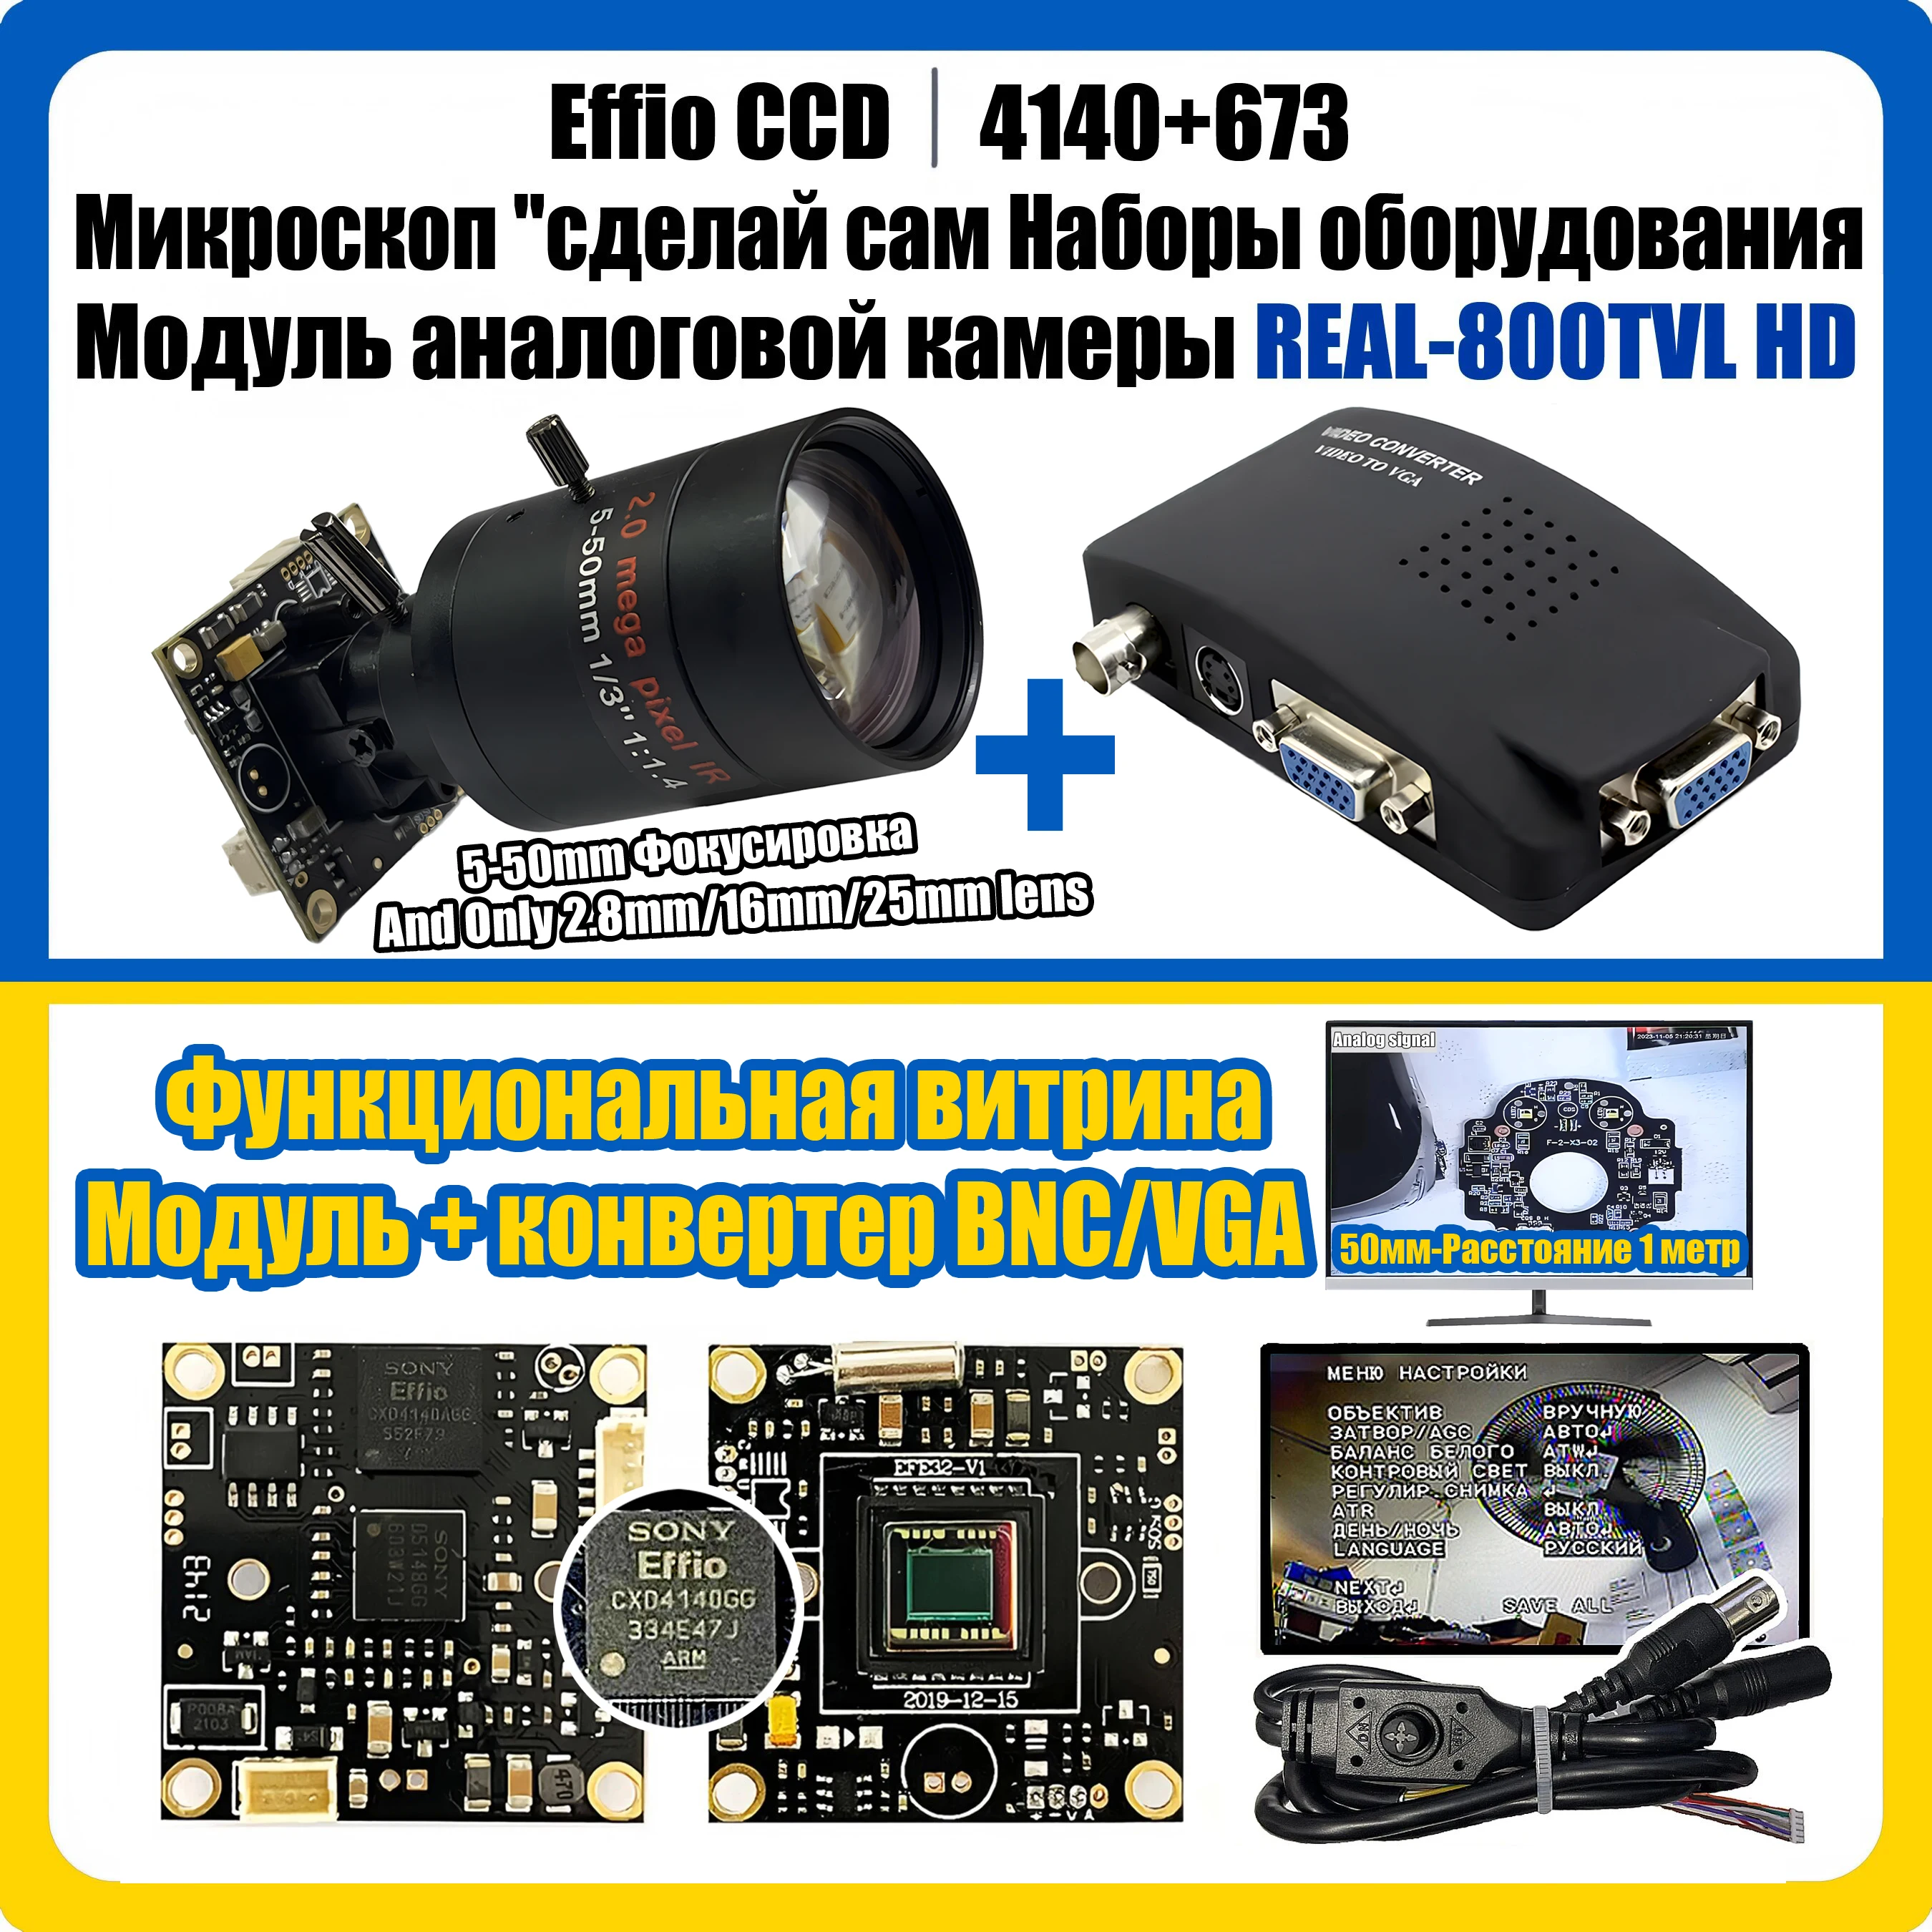 

Electronic Amplifier 16mm 25mm SONY EFFIO 4140+673 CHIP Module CCD 800TVL Analog HD CCTV Camera Metal DIY Microscope TestBed Kit